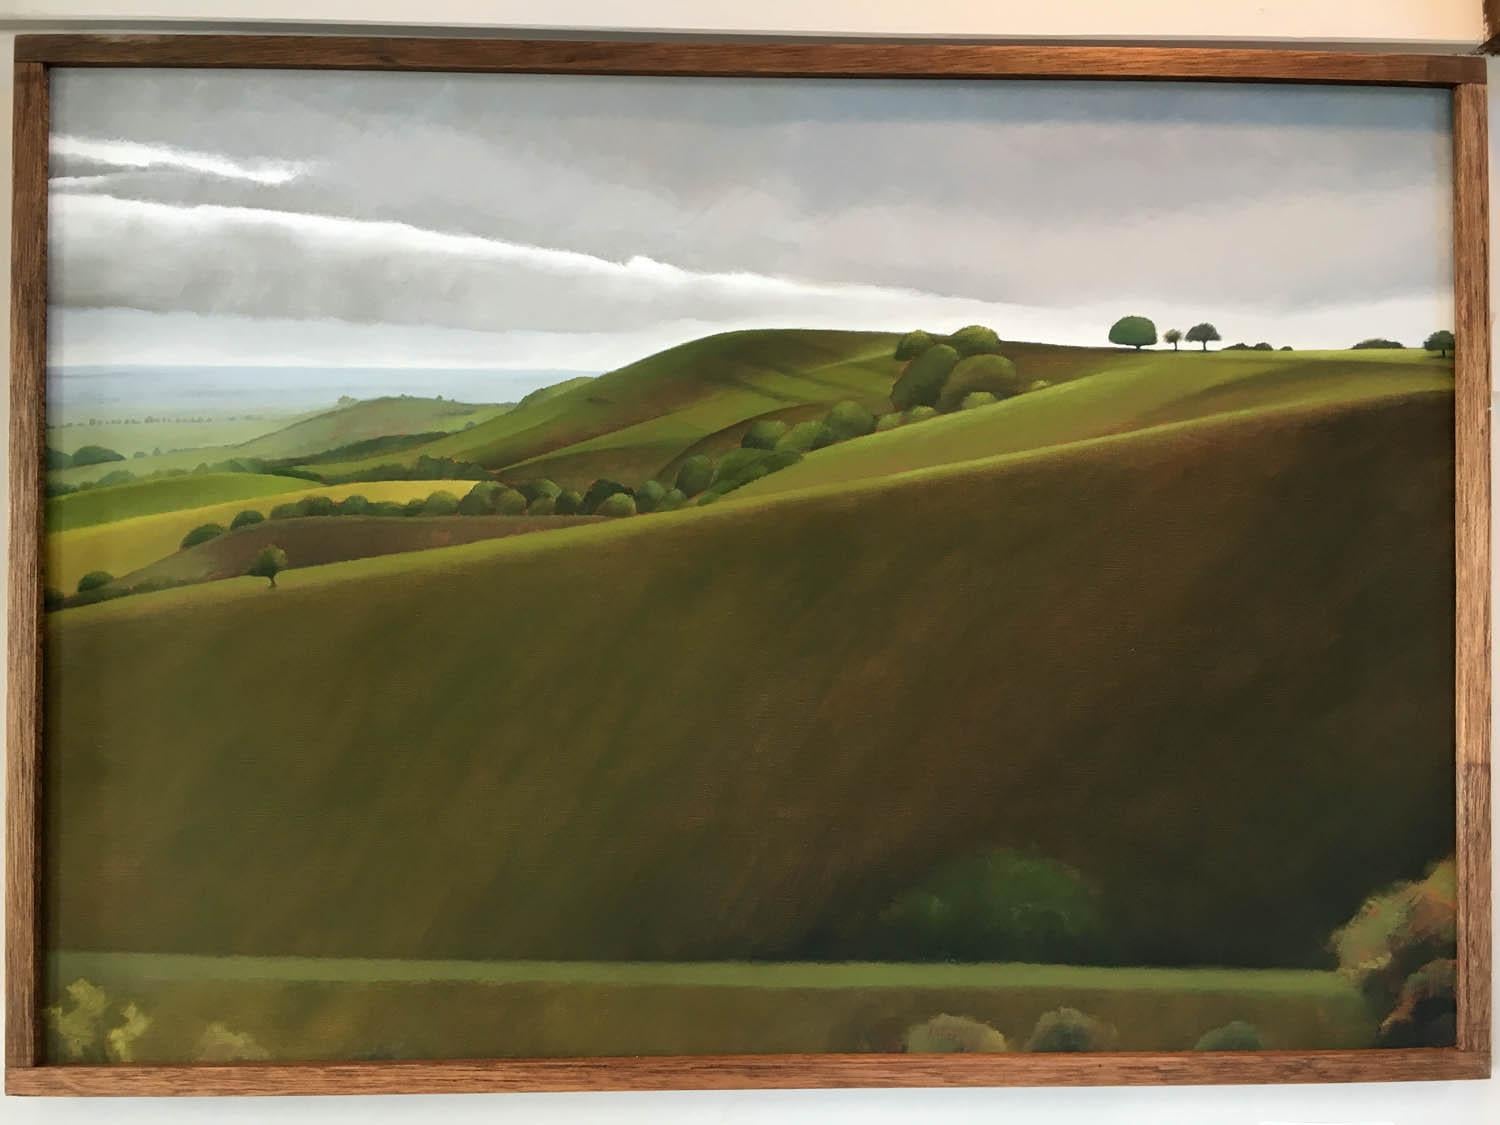 Tim Woodcock-Jones Landscape Painting - Pegsdon Hill, landscape, traditional, original art, contemporary modern painting